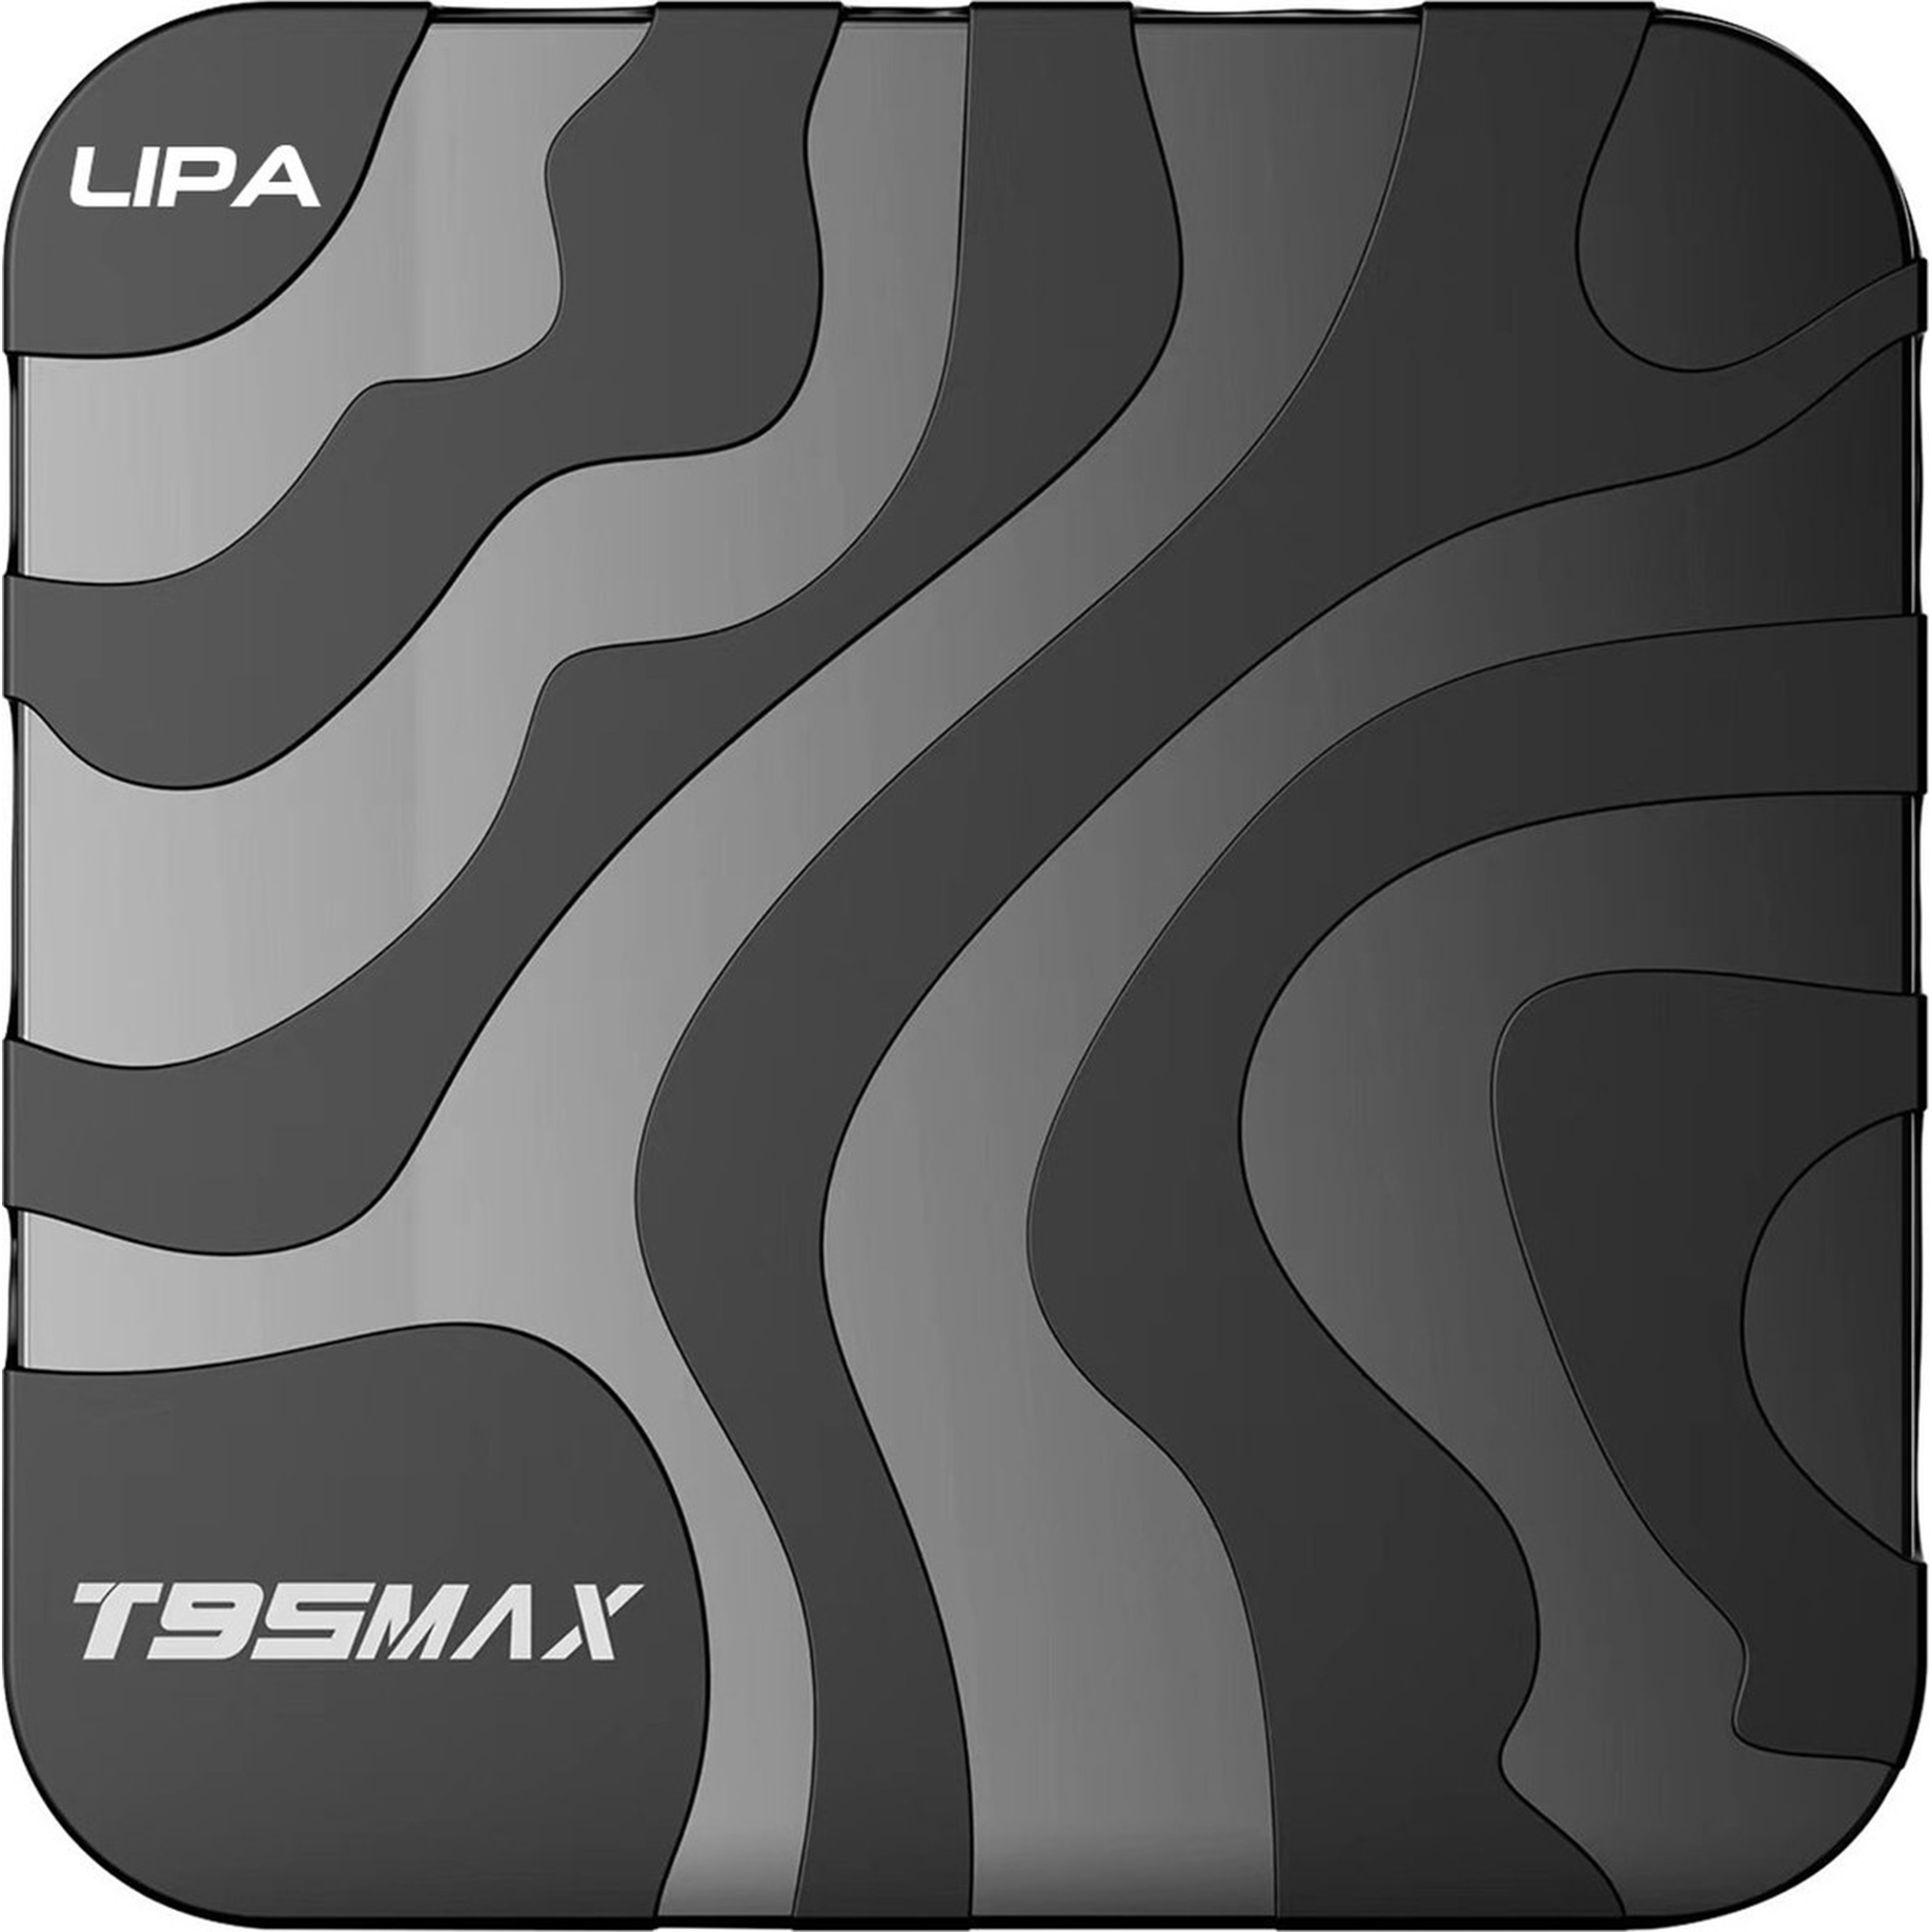 T95 LIPA GB Android Multimedia tv Max 64 box player, Black